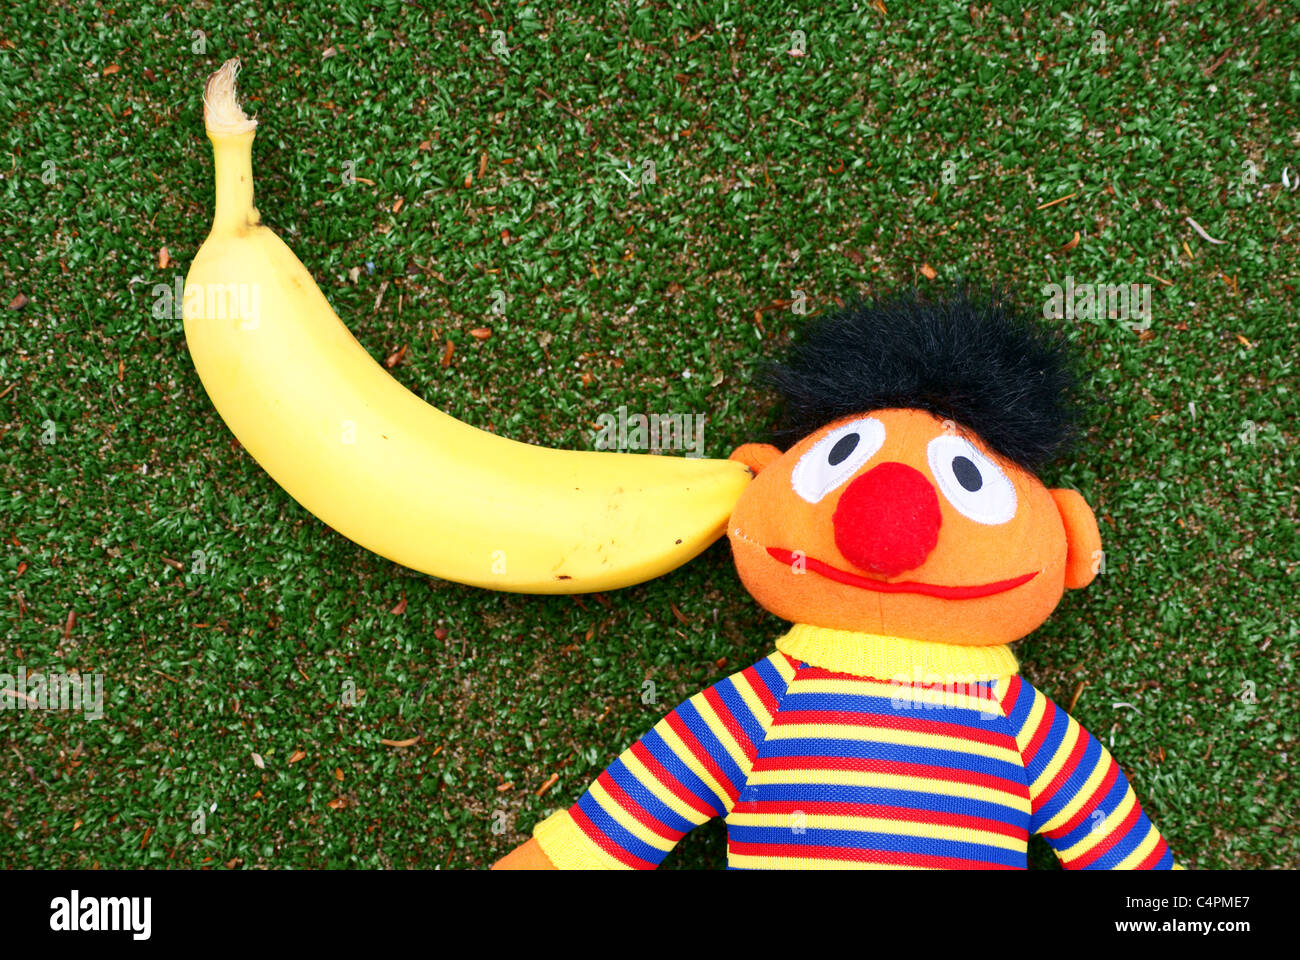 Sesam street, Bert with a banana in his ear. Stock Photo